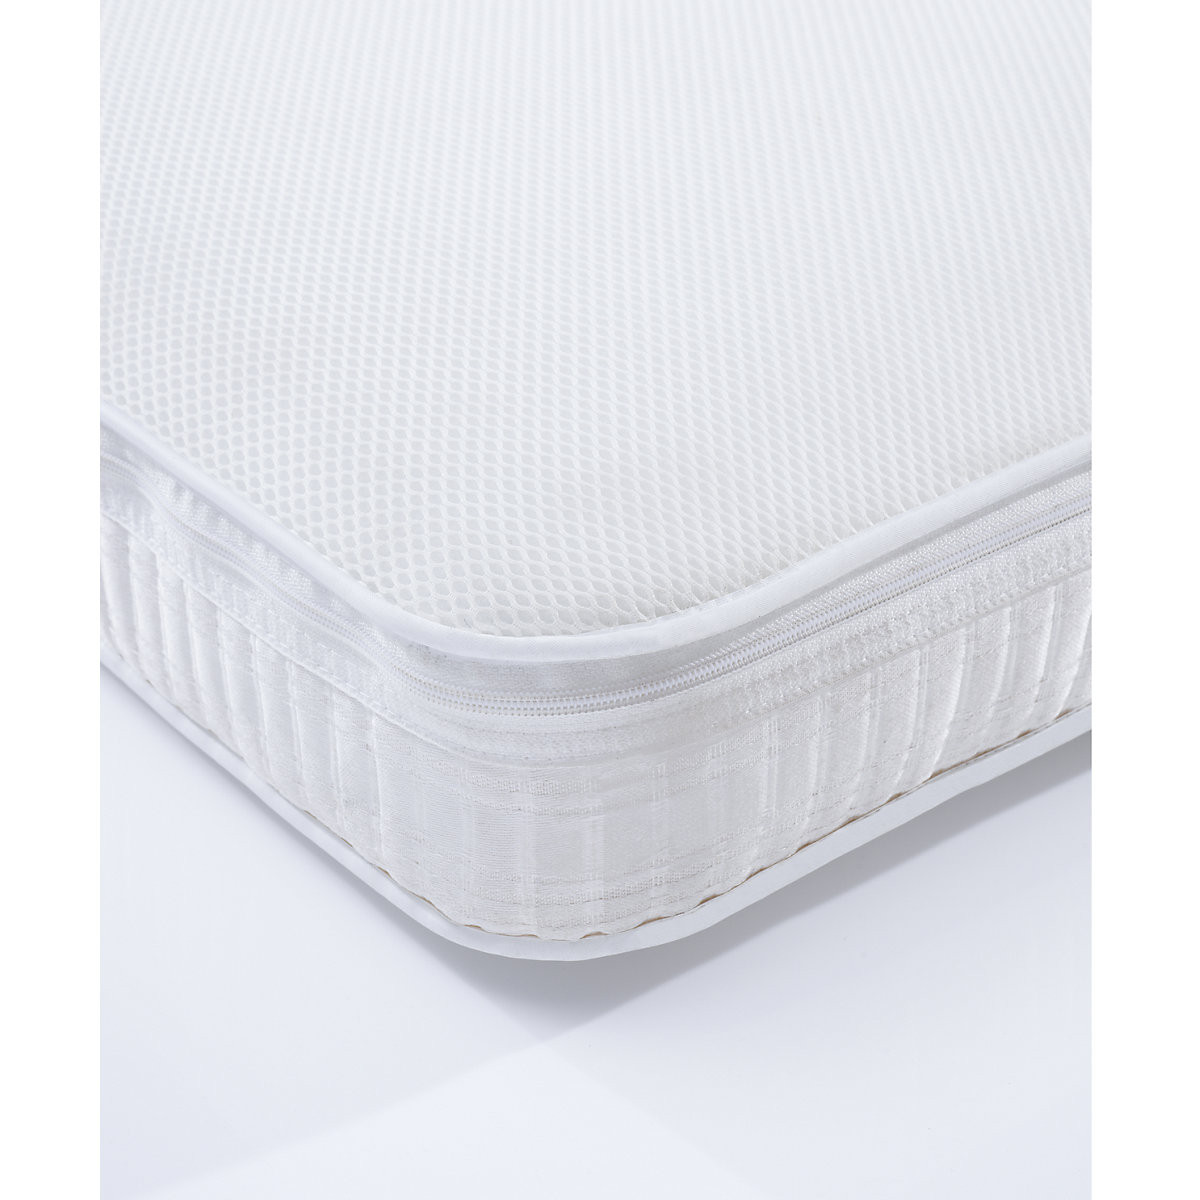 mothercare airflow pocket spring mattress